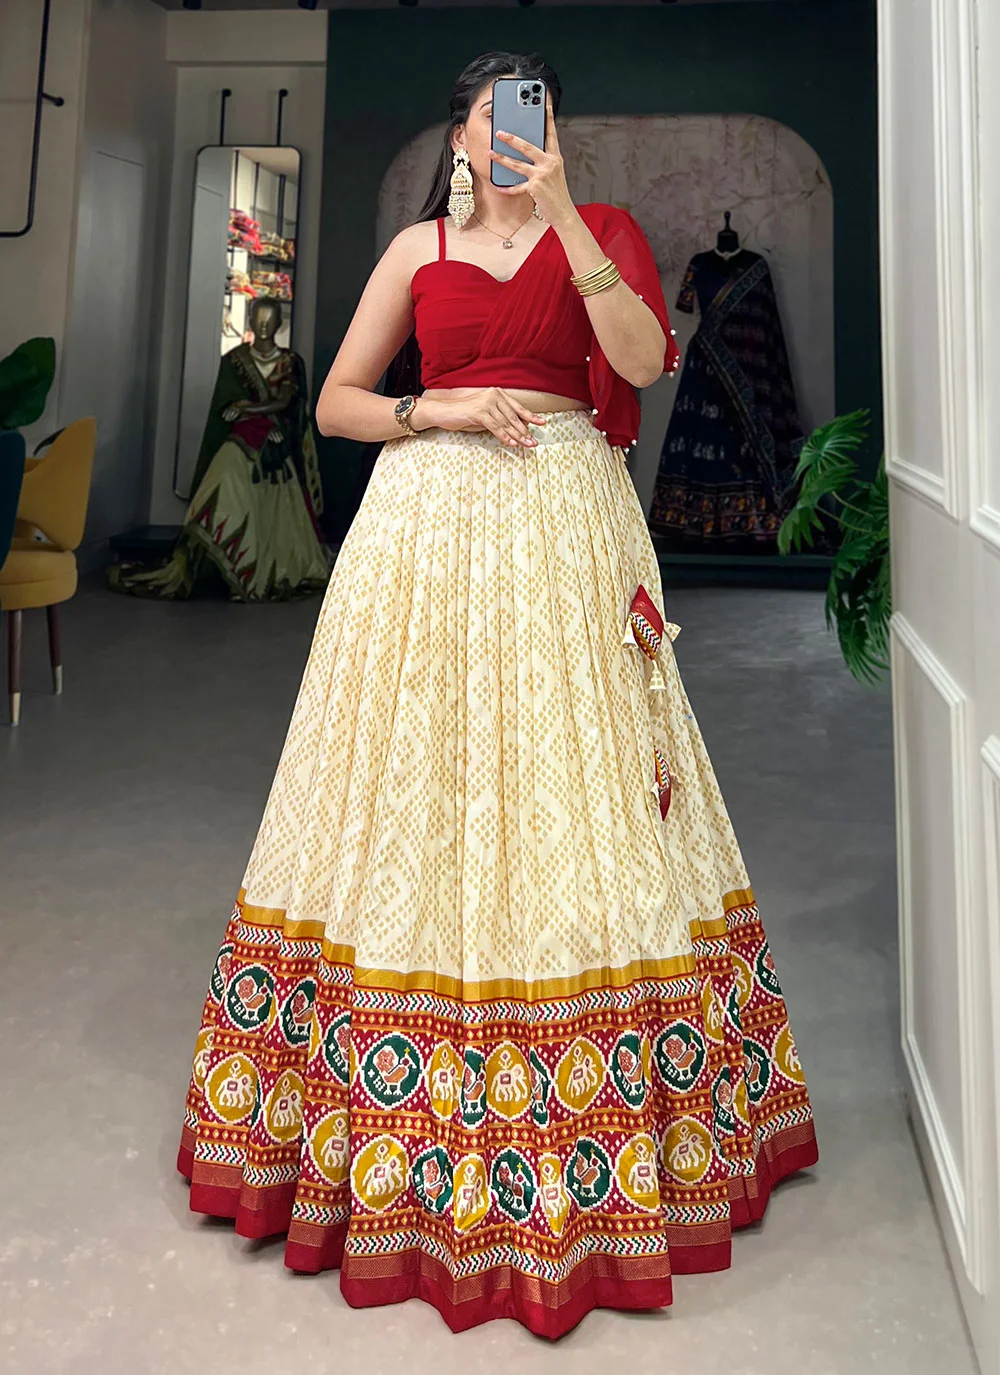 Indian Dresses Online: Explore the Exquisite Collection at SareeSaga